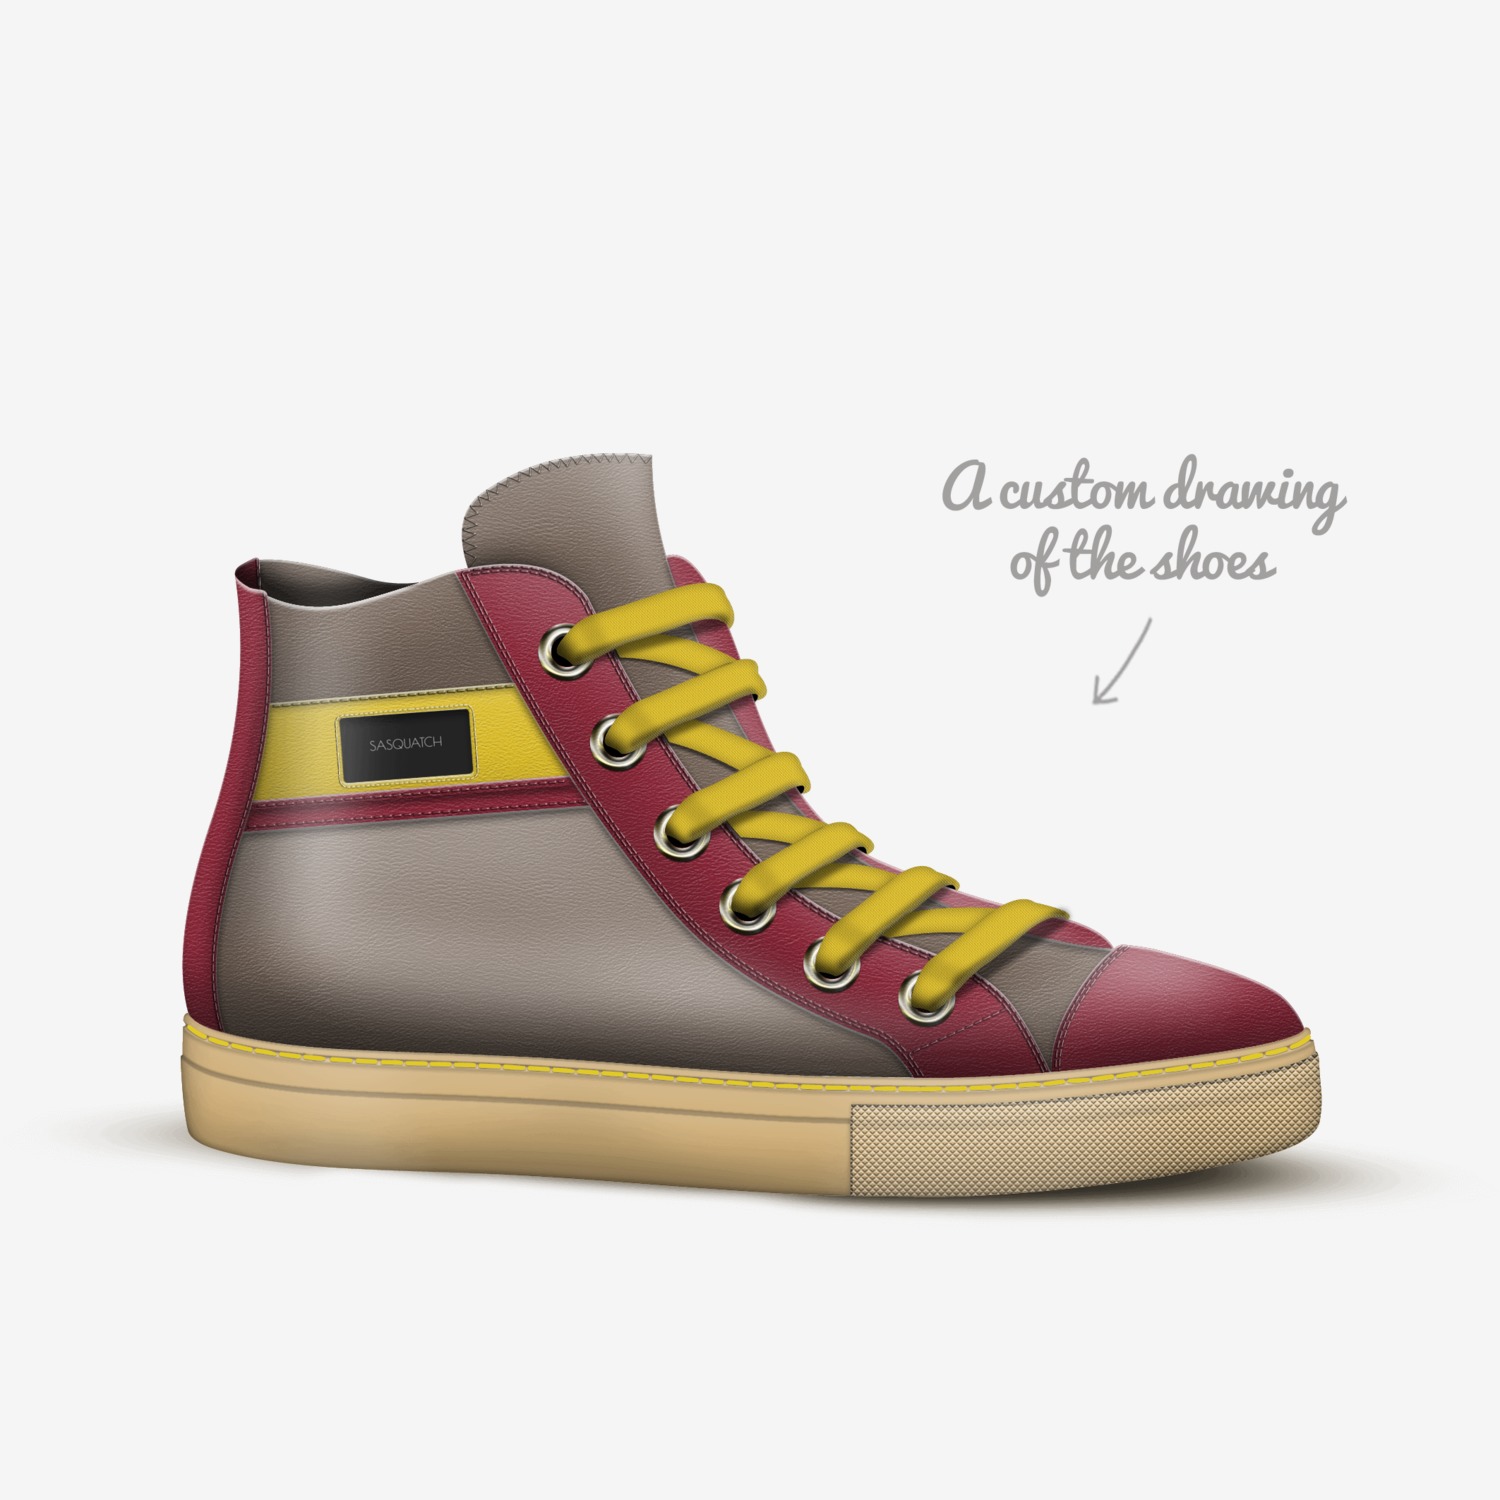 Hechting Gering Continu Sasquatch | A Custom Shoe concept by Beth-el Algarin